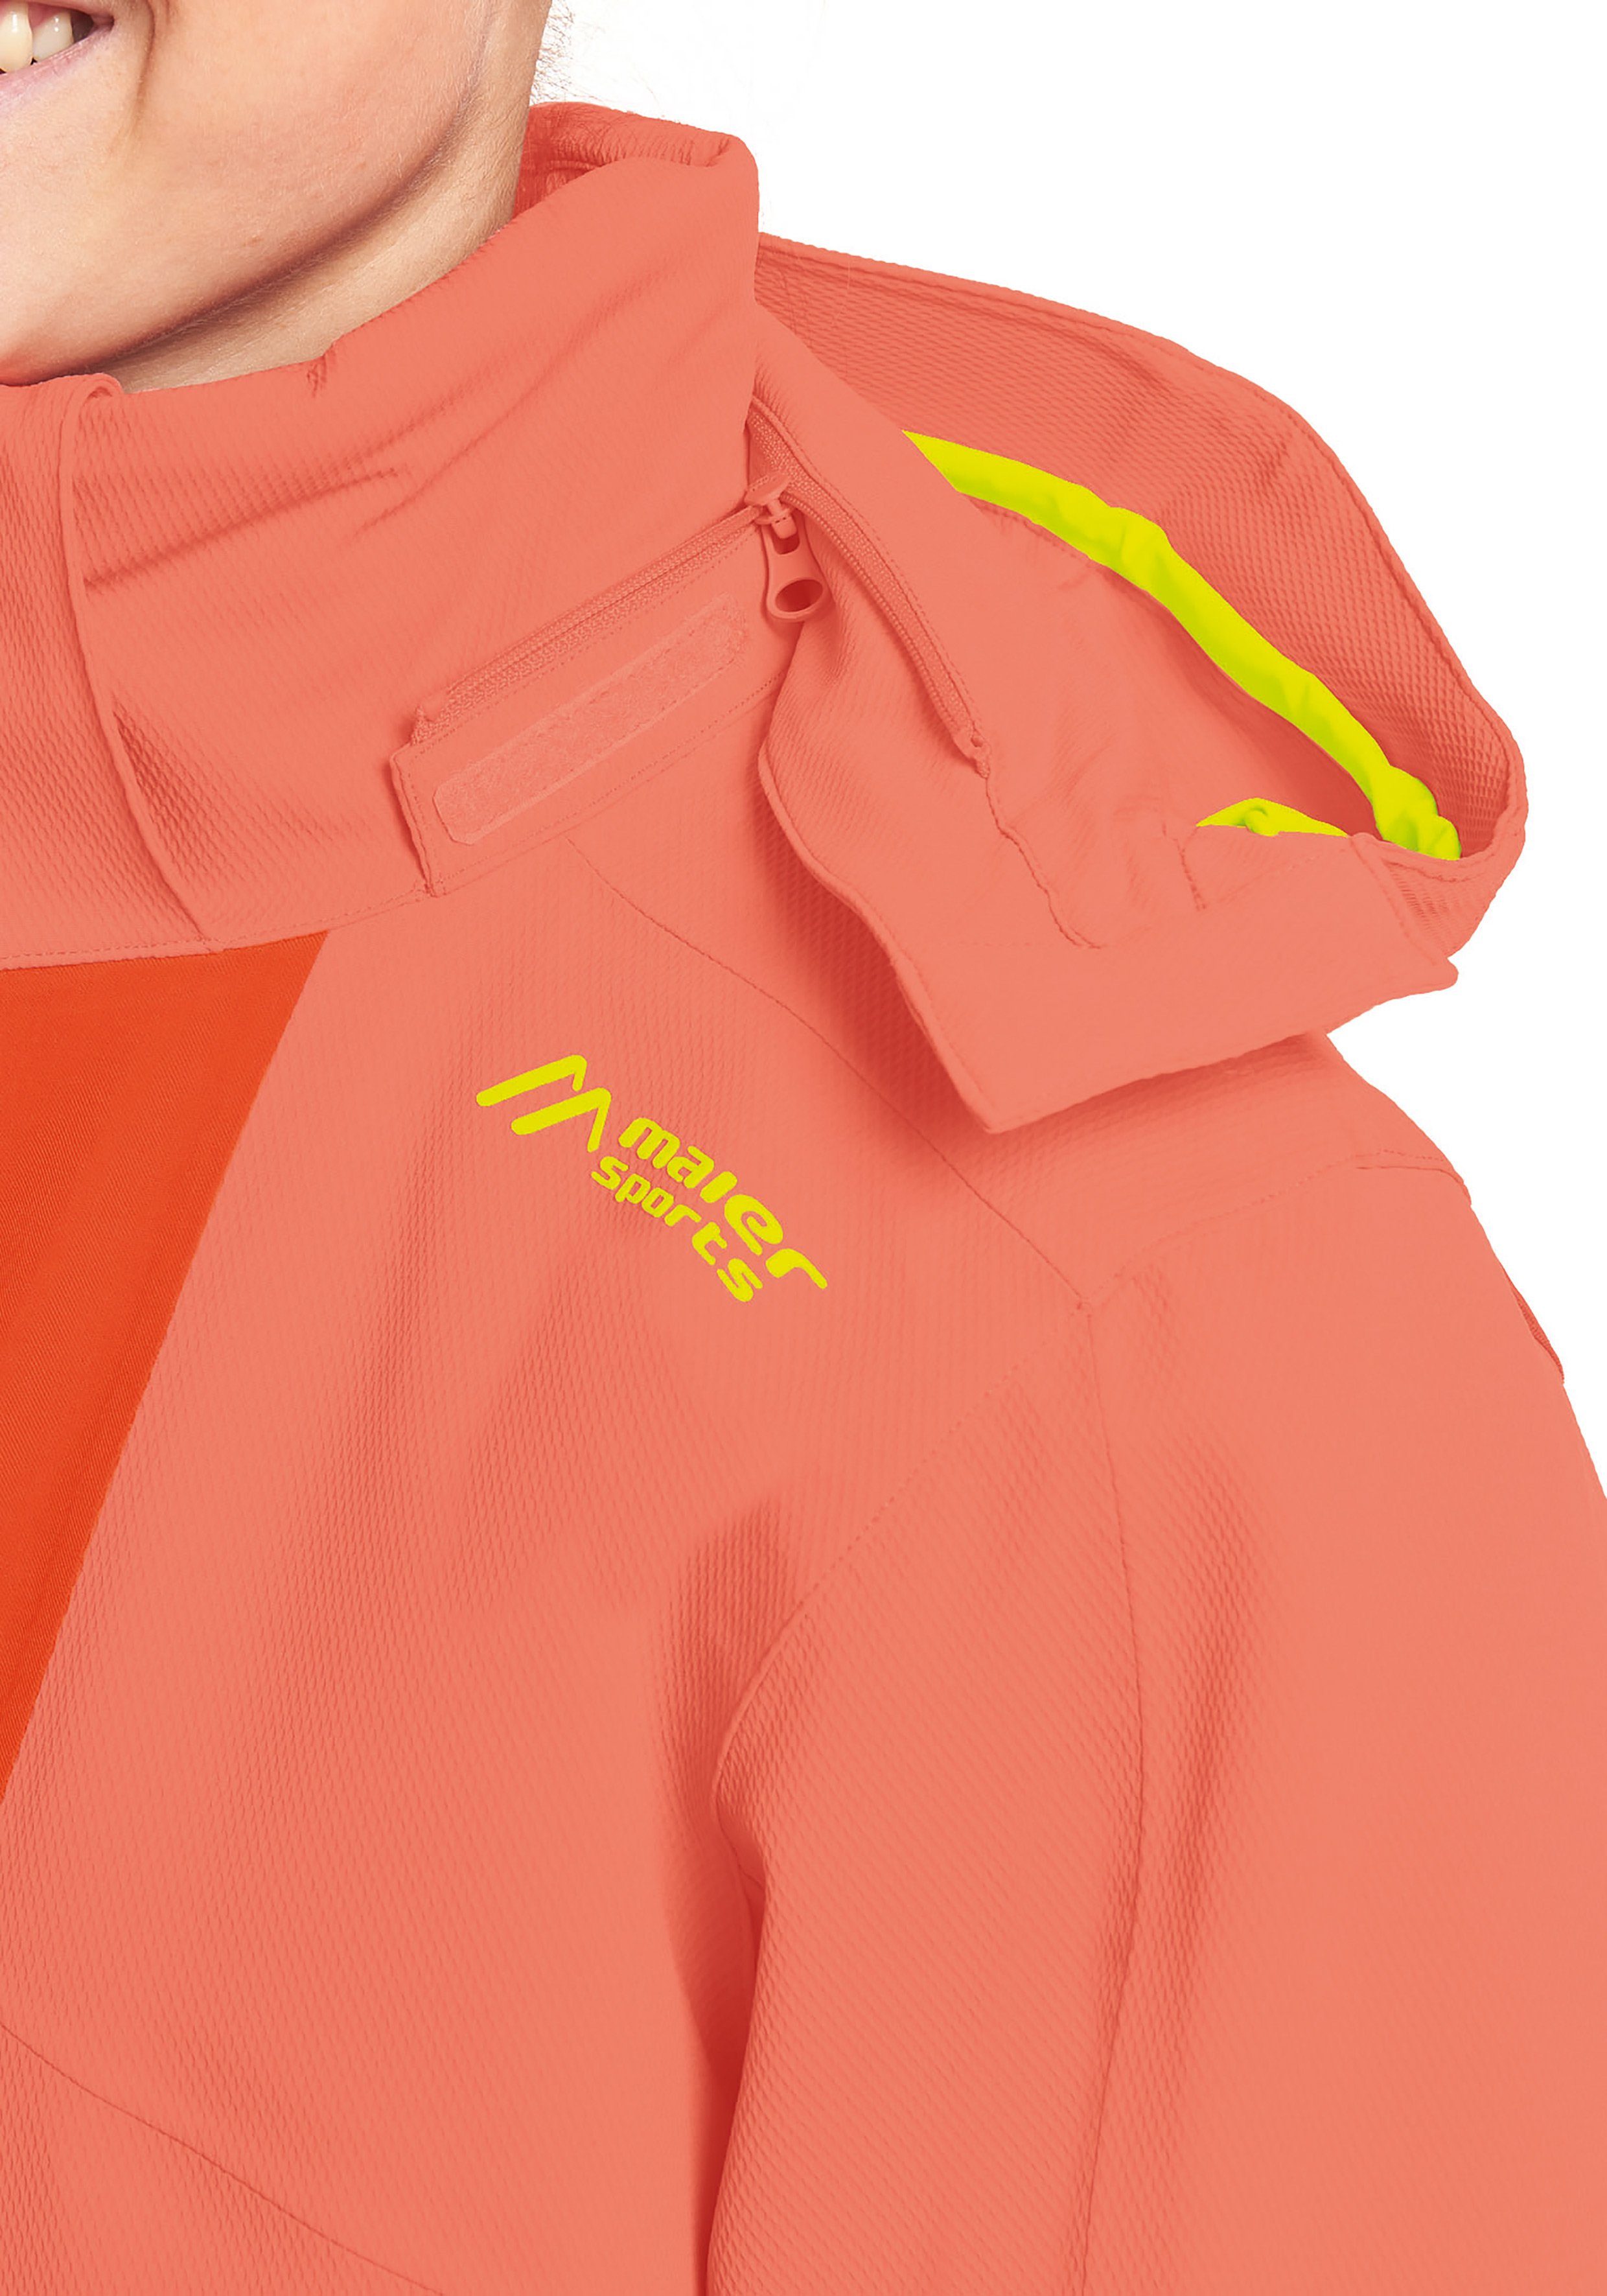 Modern für Sports Skijacke designte perfekt Impulse orangerot Piste Fast – Freeride Skijacke Maier und W